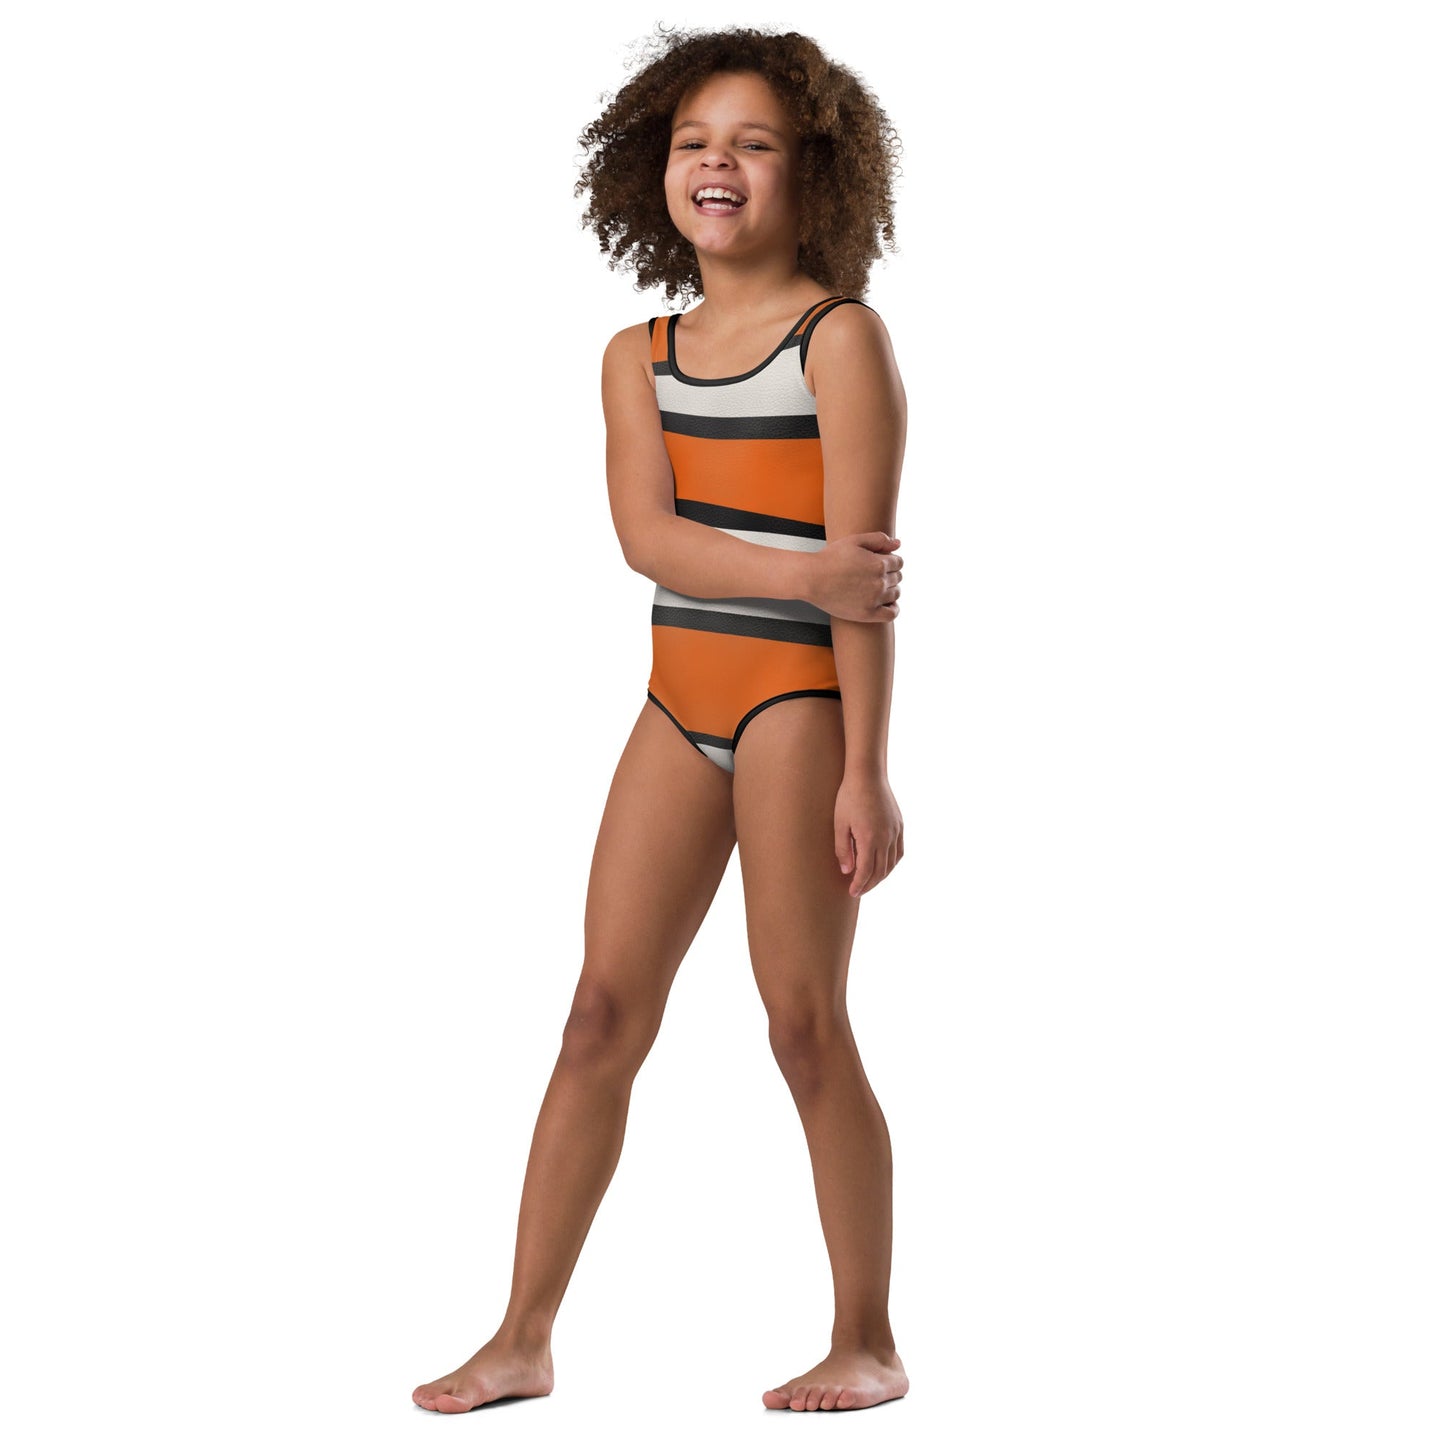 The Nemo Kids Swimsuit disney beachdisney boundingLittle Lady Shay Boutique